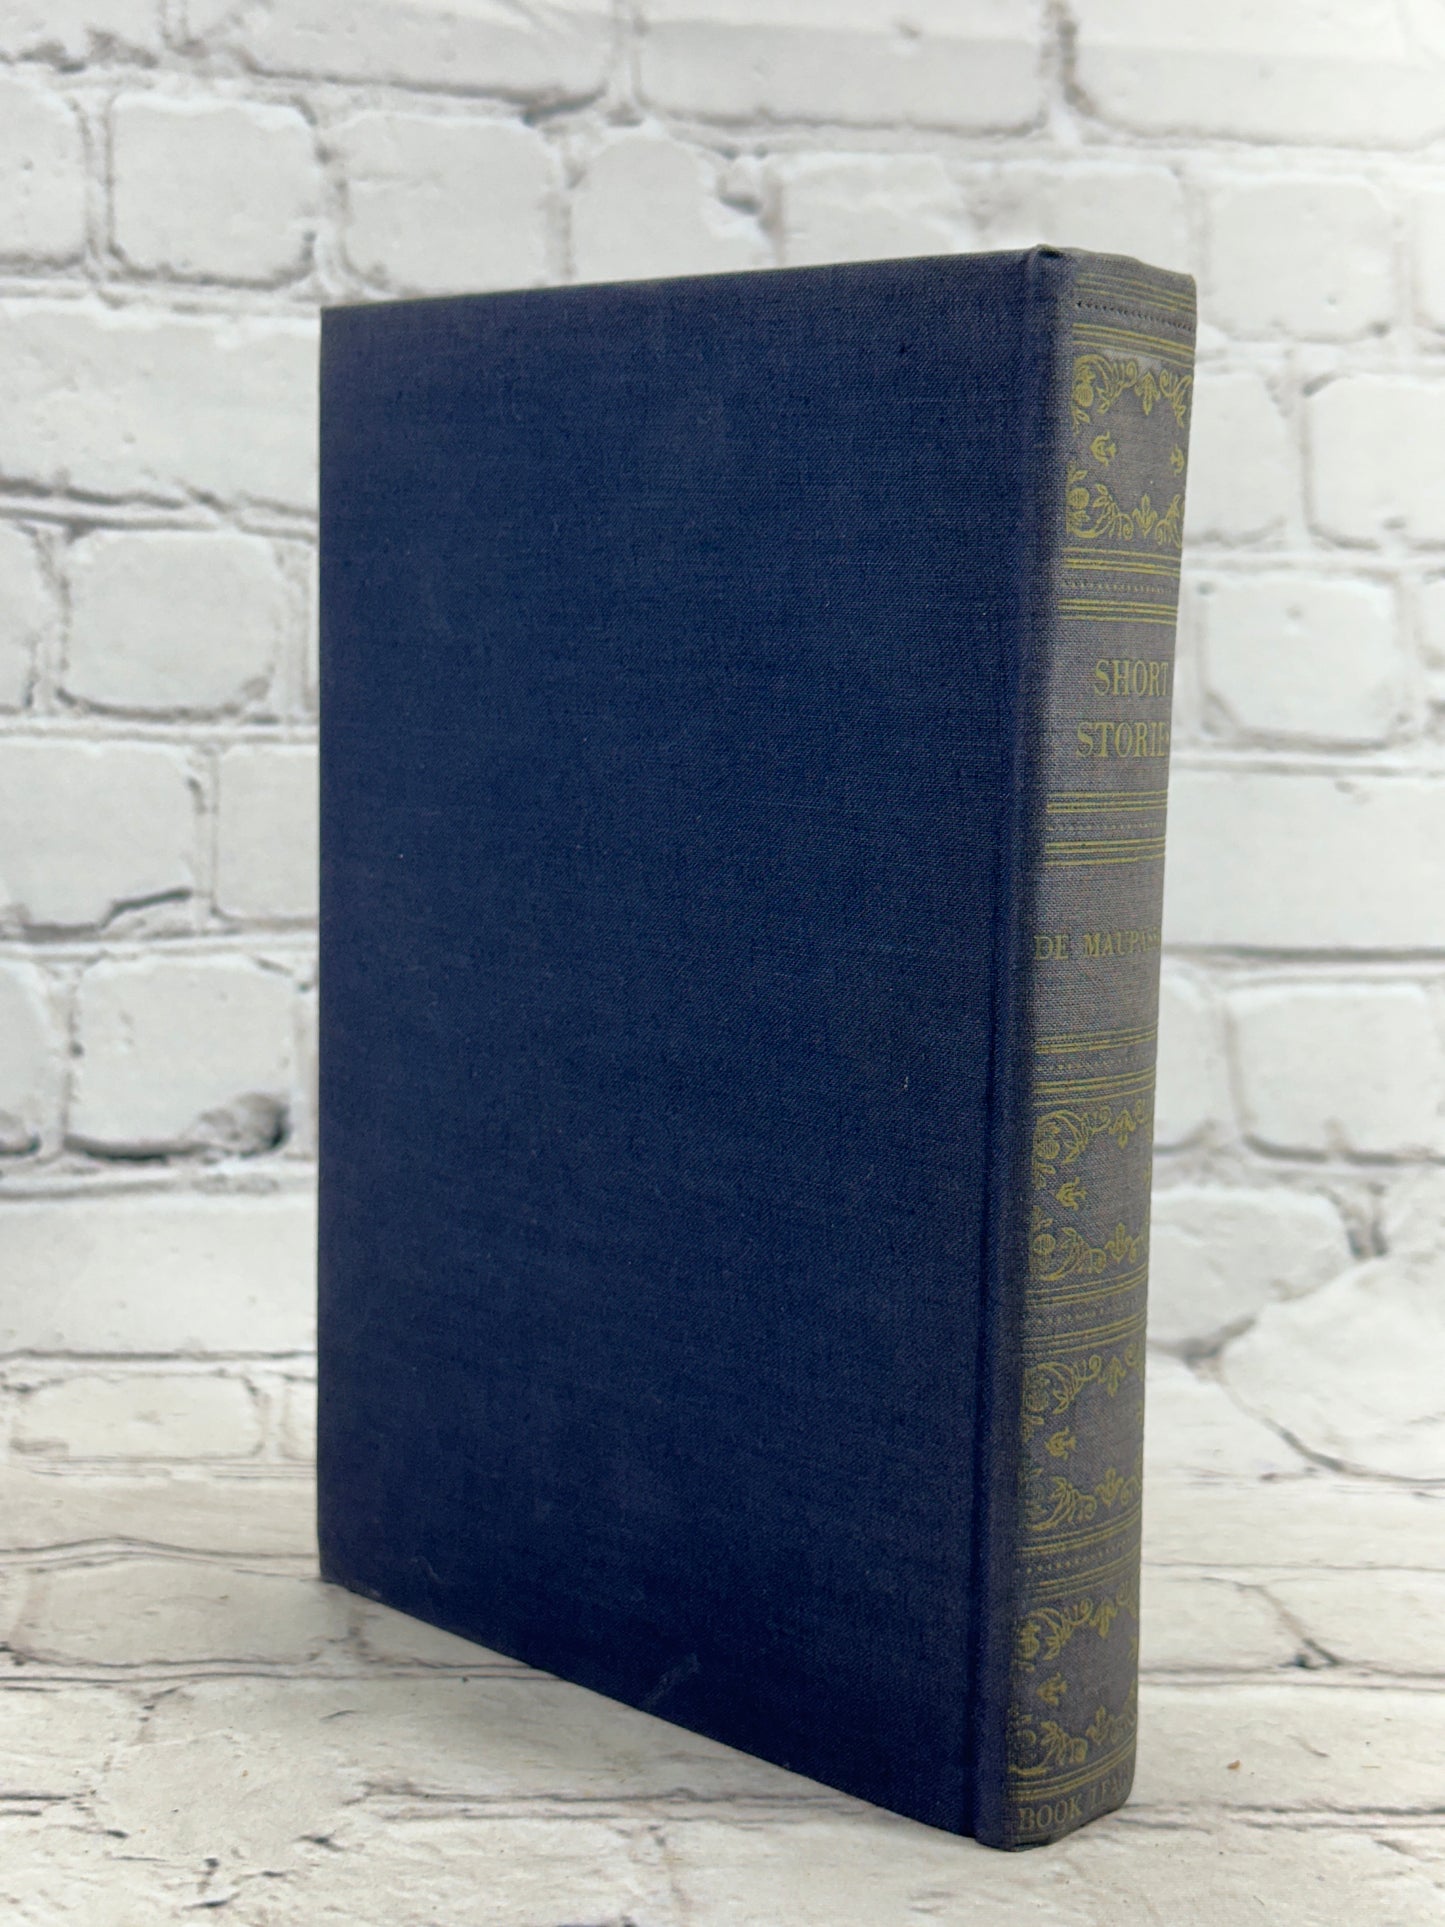 Short Stories of De Maupassant [1941 · Book League of America]